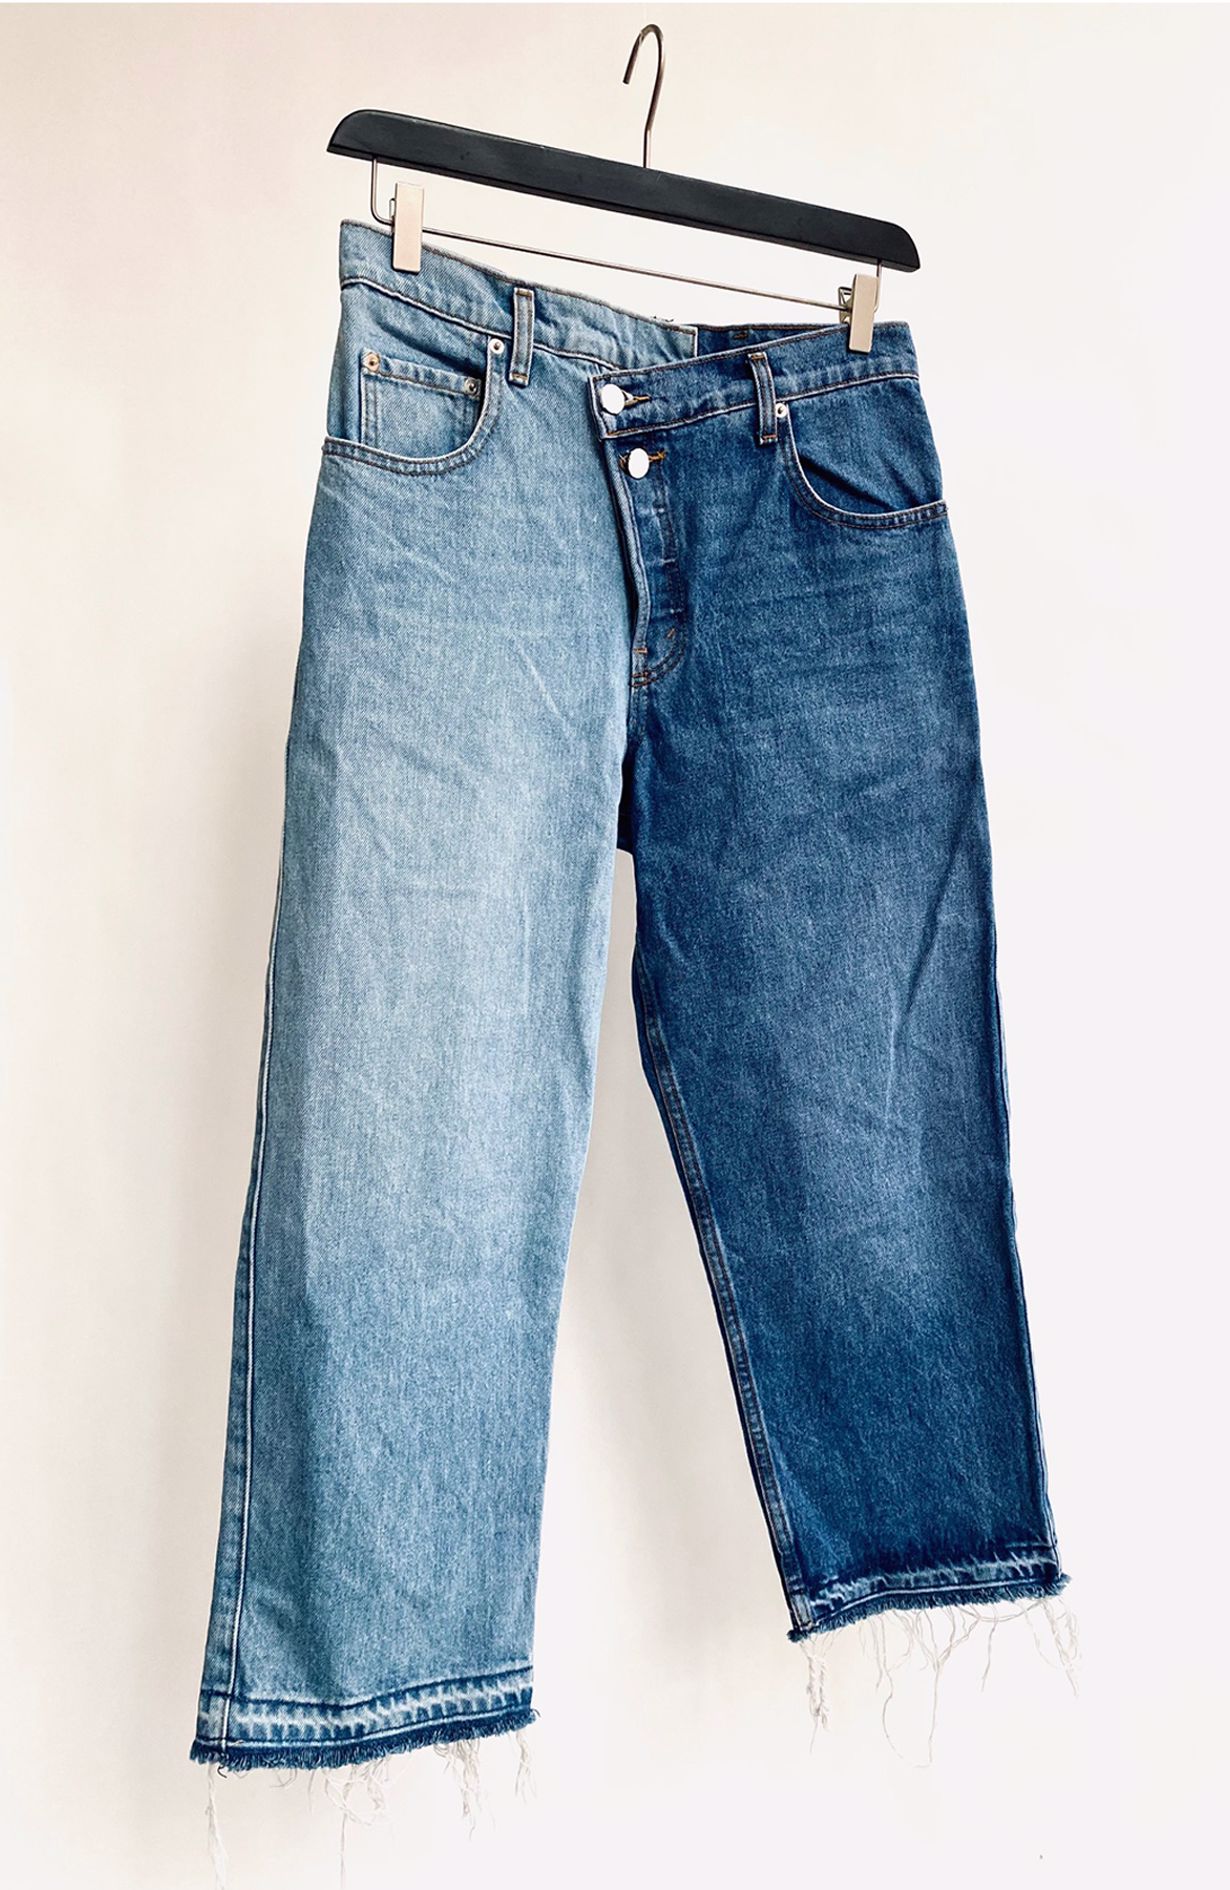 Monse Jeans -  Size 6 (38) 